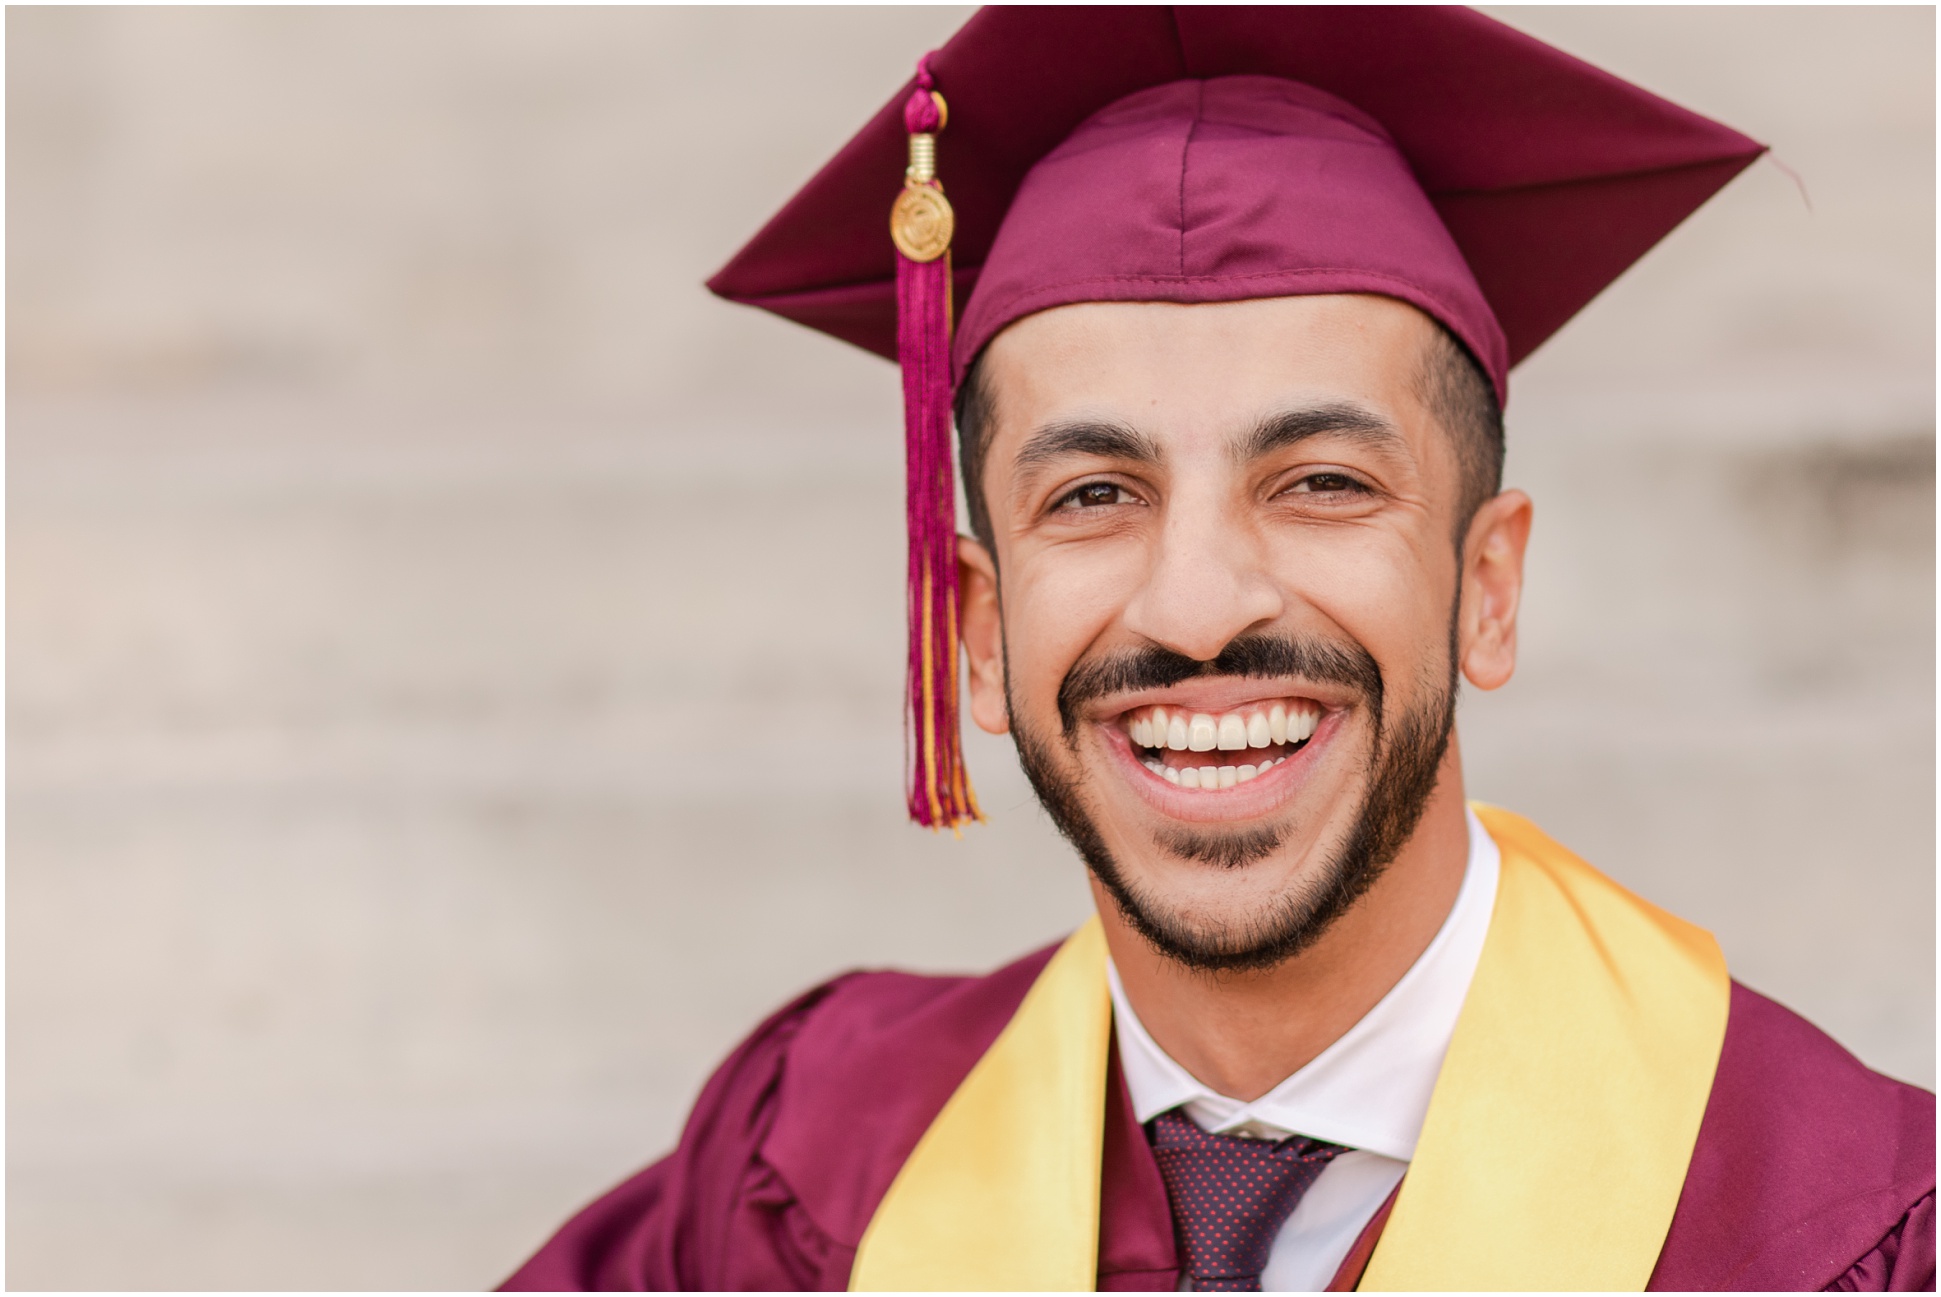 ASU graduate in cap and gown smiling at camera